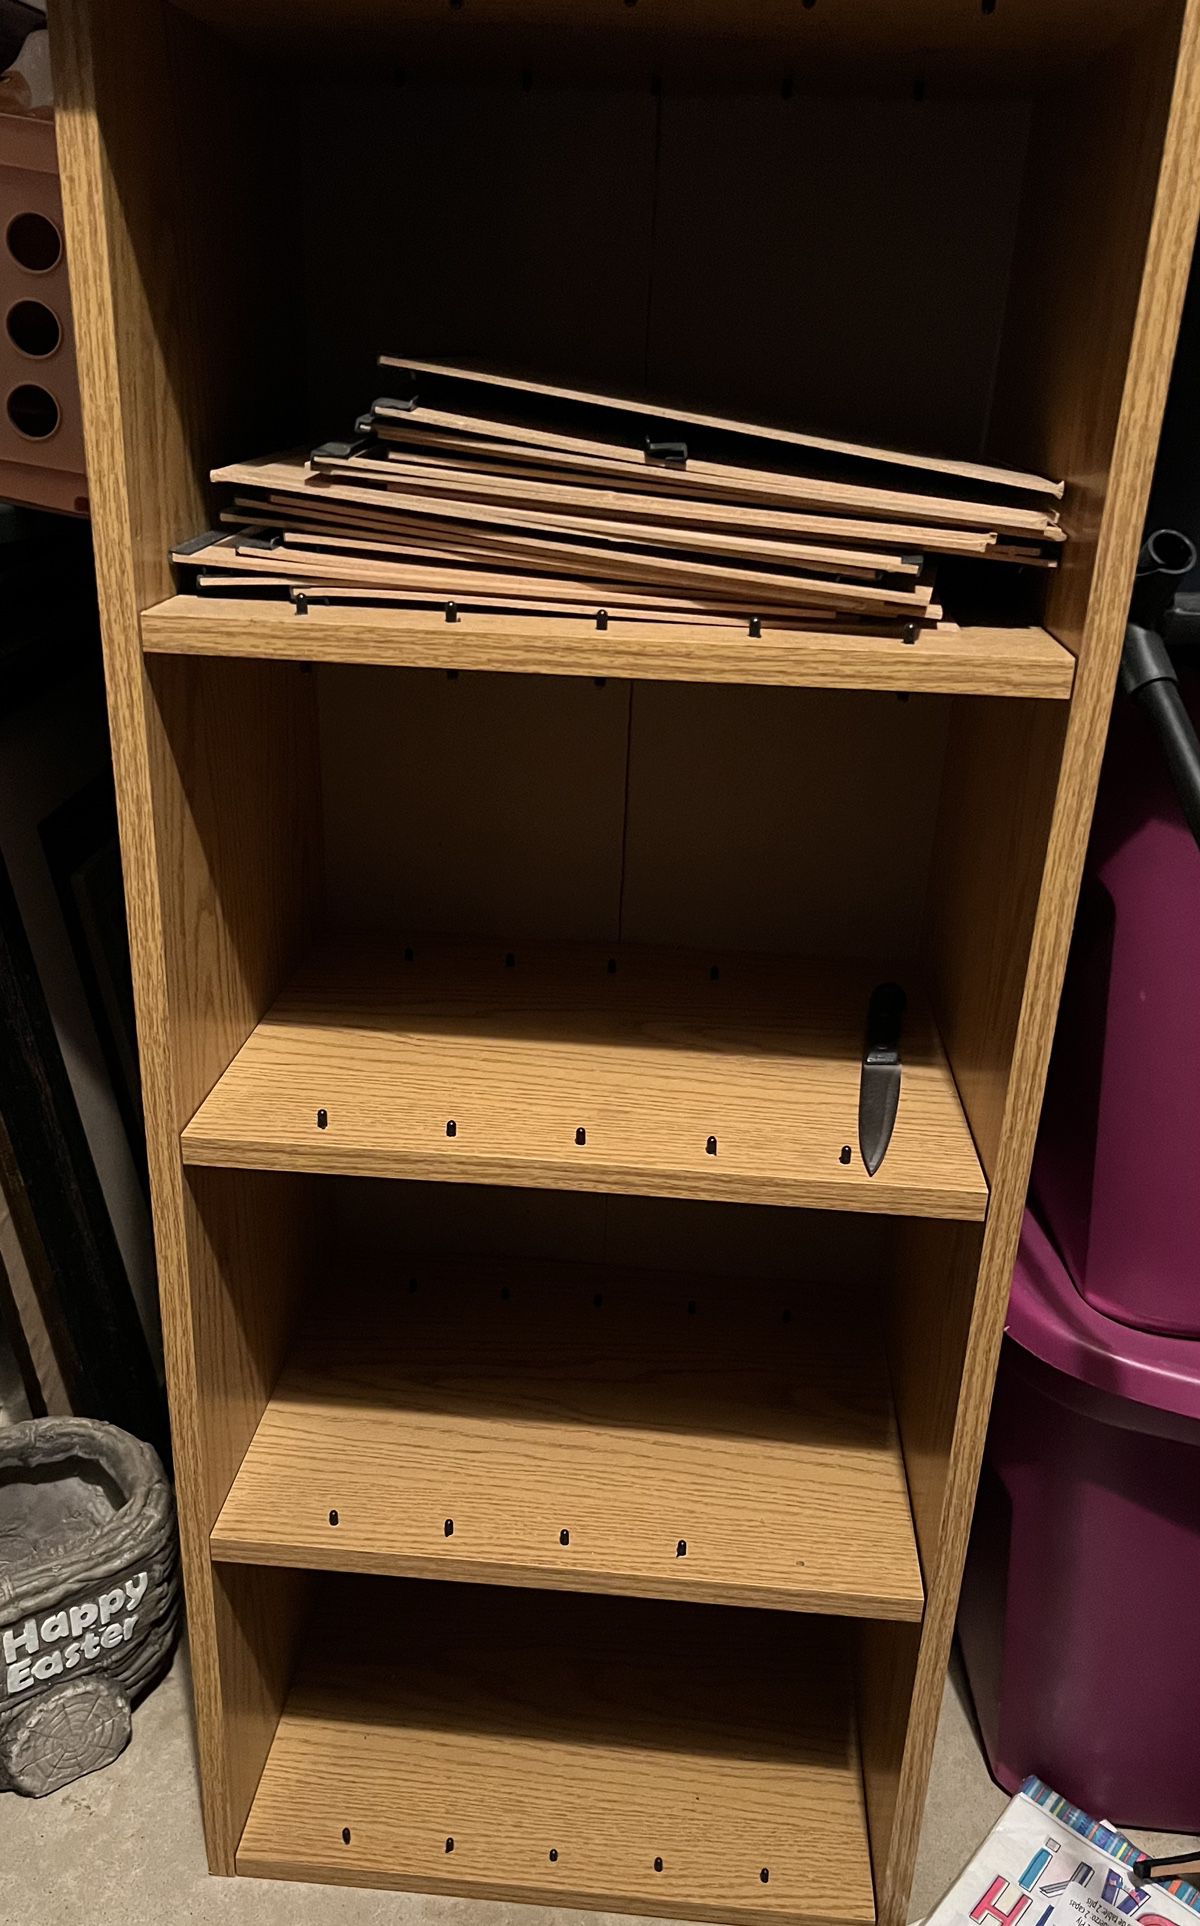 Cabinet Shelf 